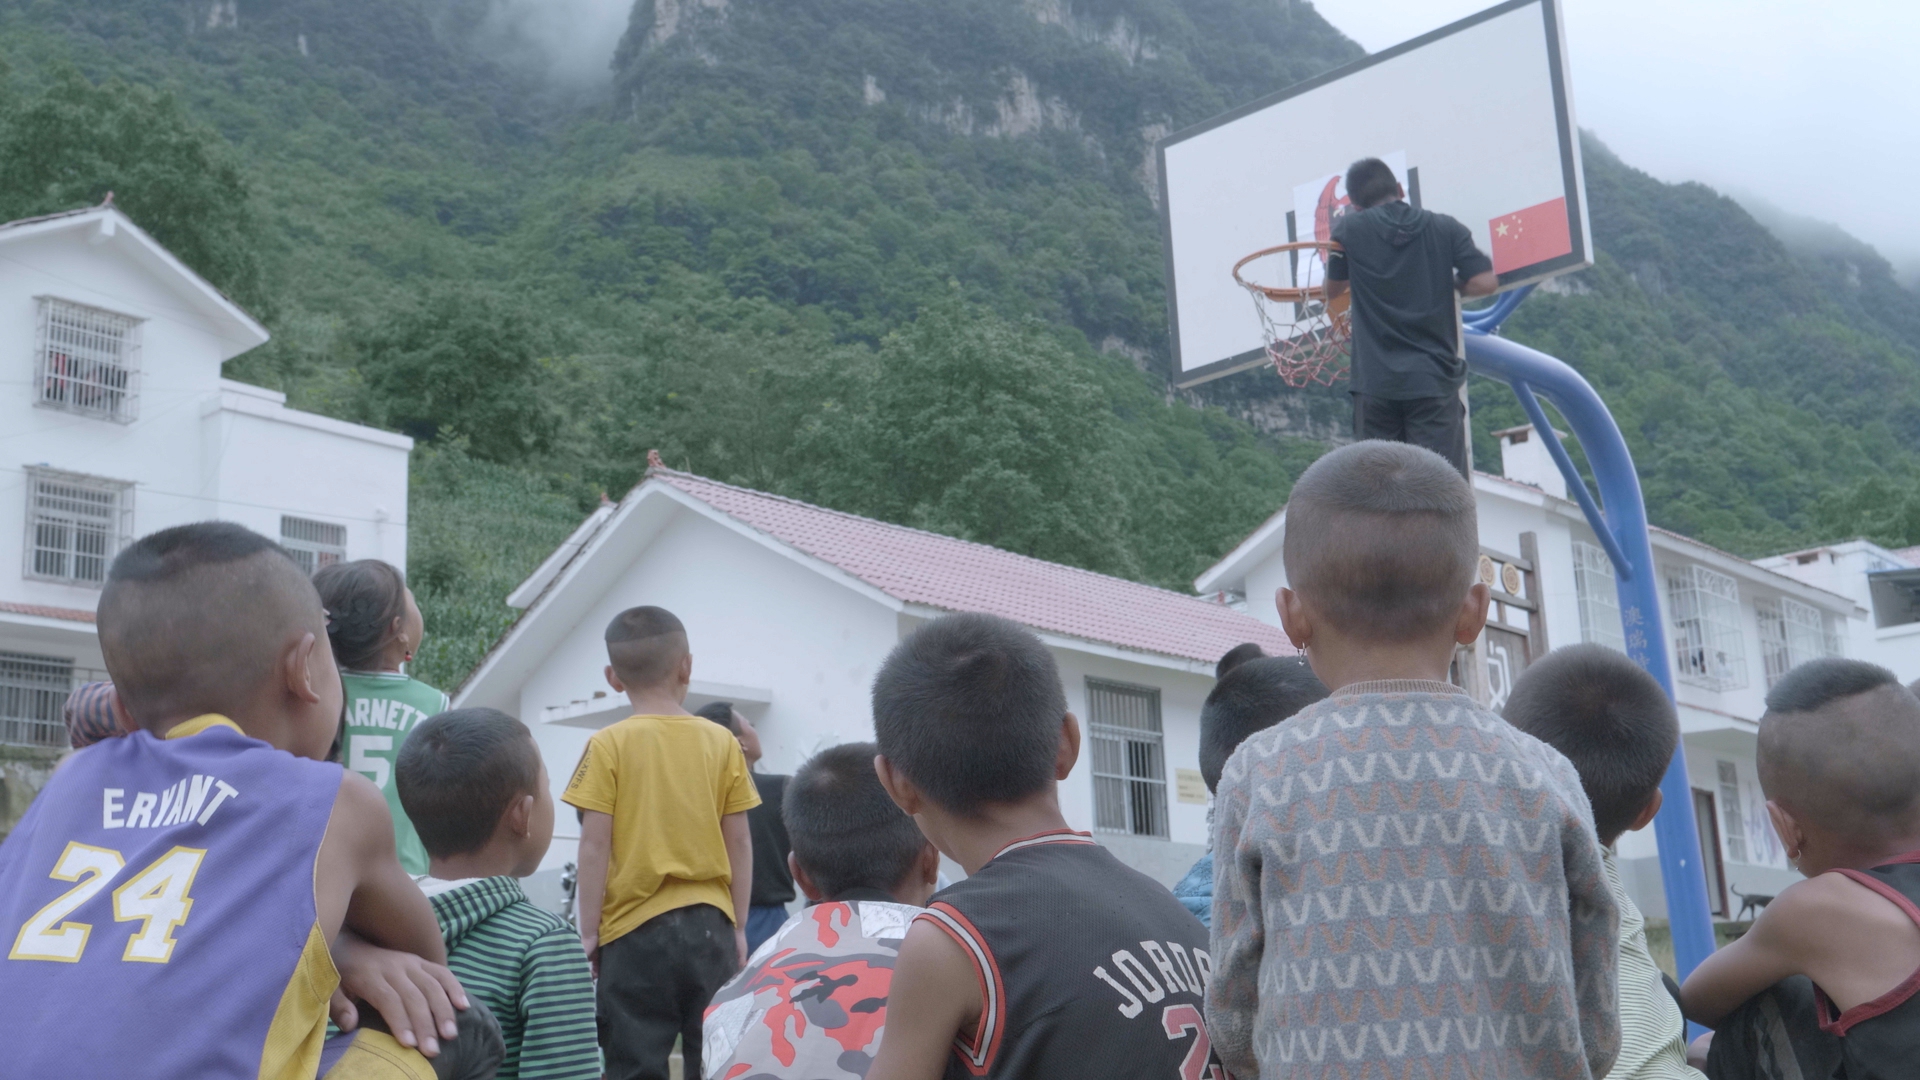 A coach climbs a basketball hoop, a crowd of boys watch him